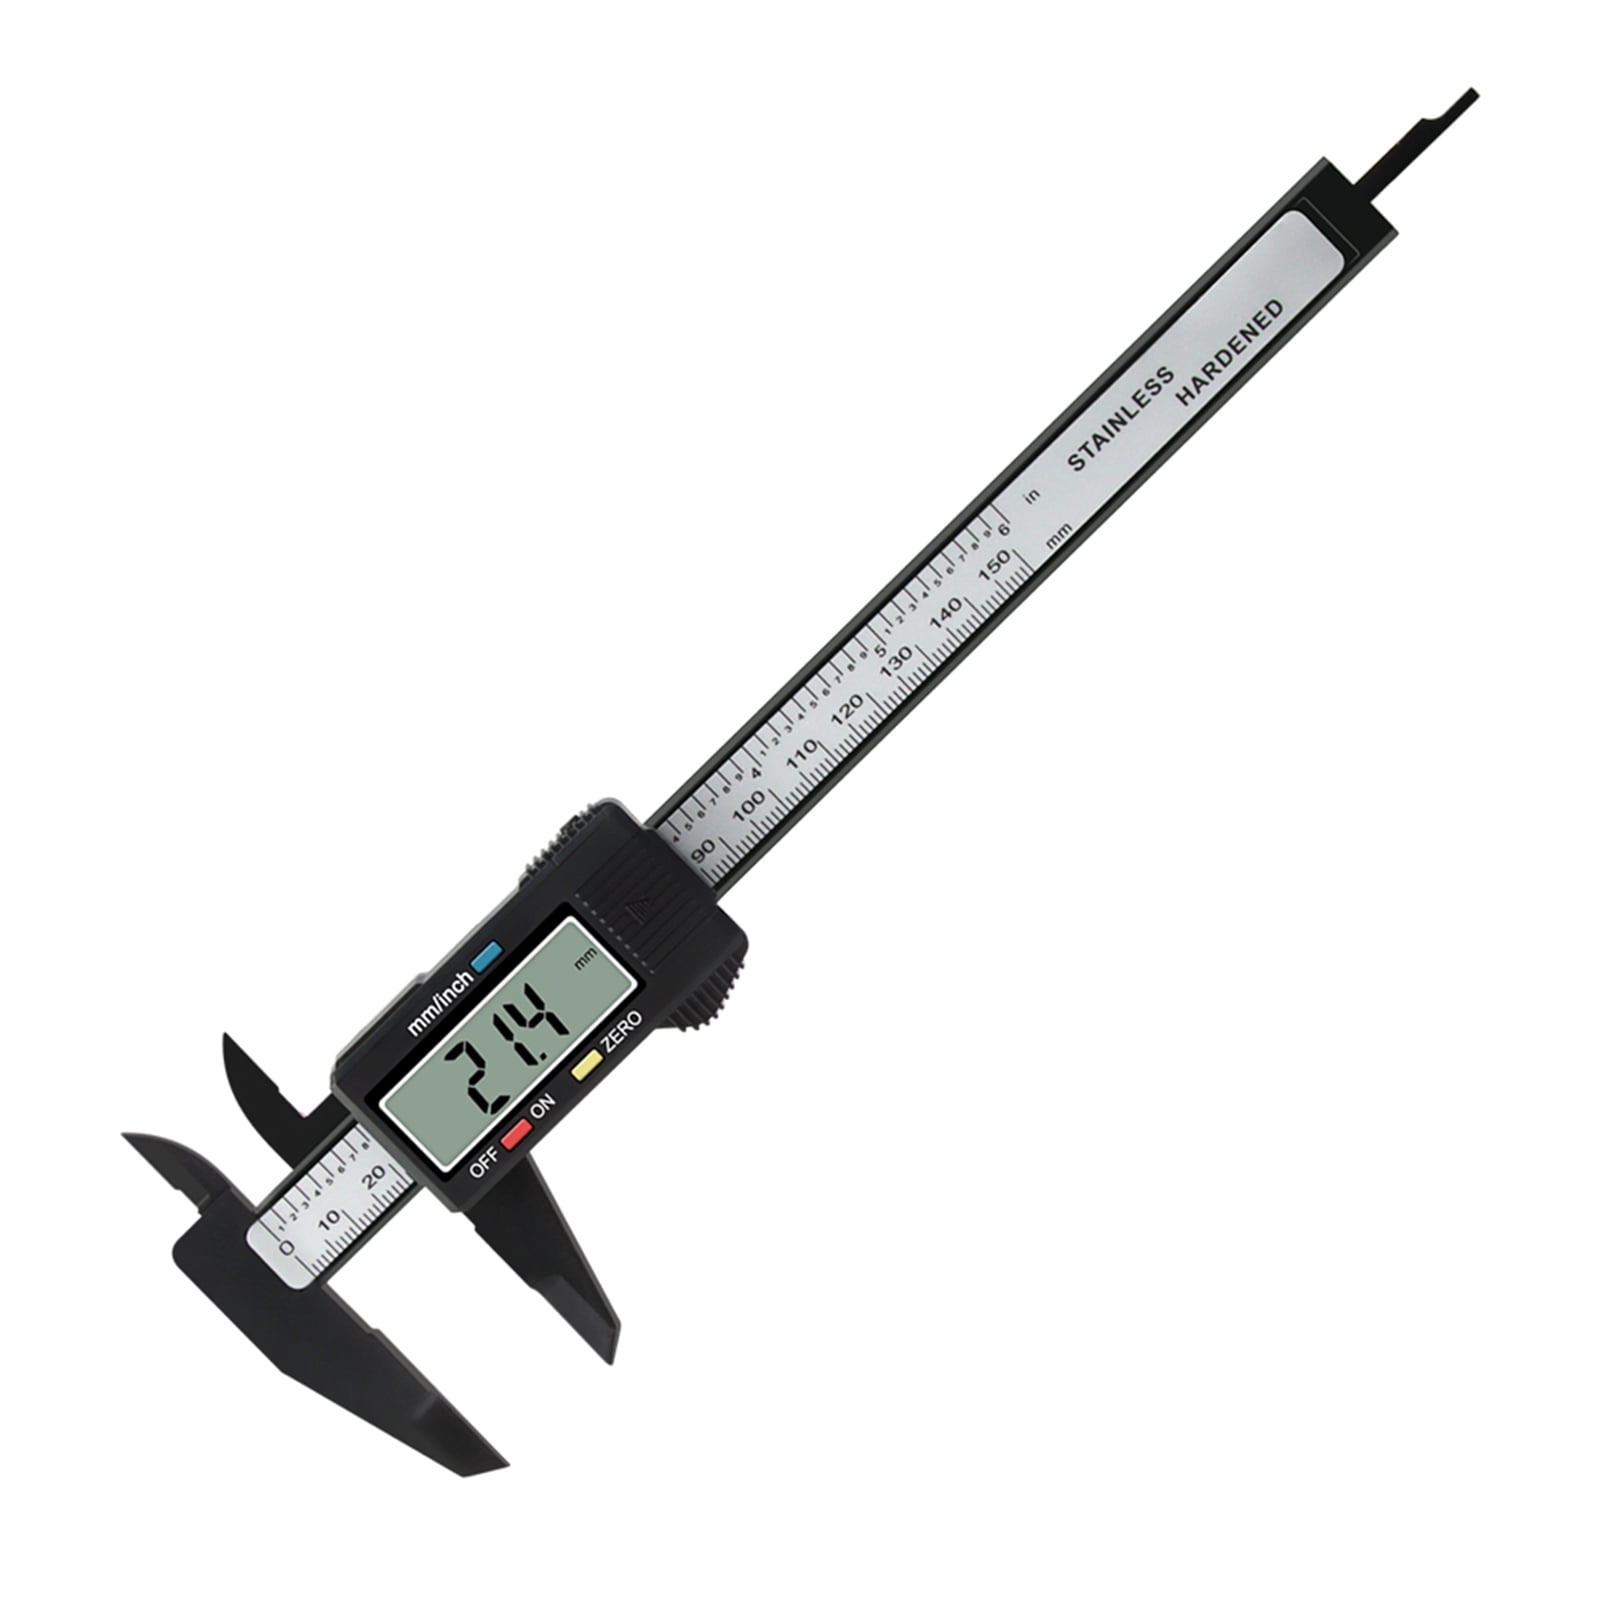 LCD Digital Digitaler Messschieber Schieblehre 150mm Caliper Vernier Micrometer 